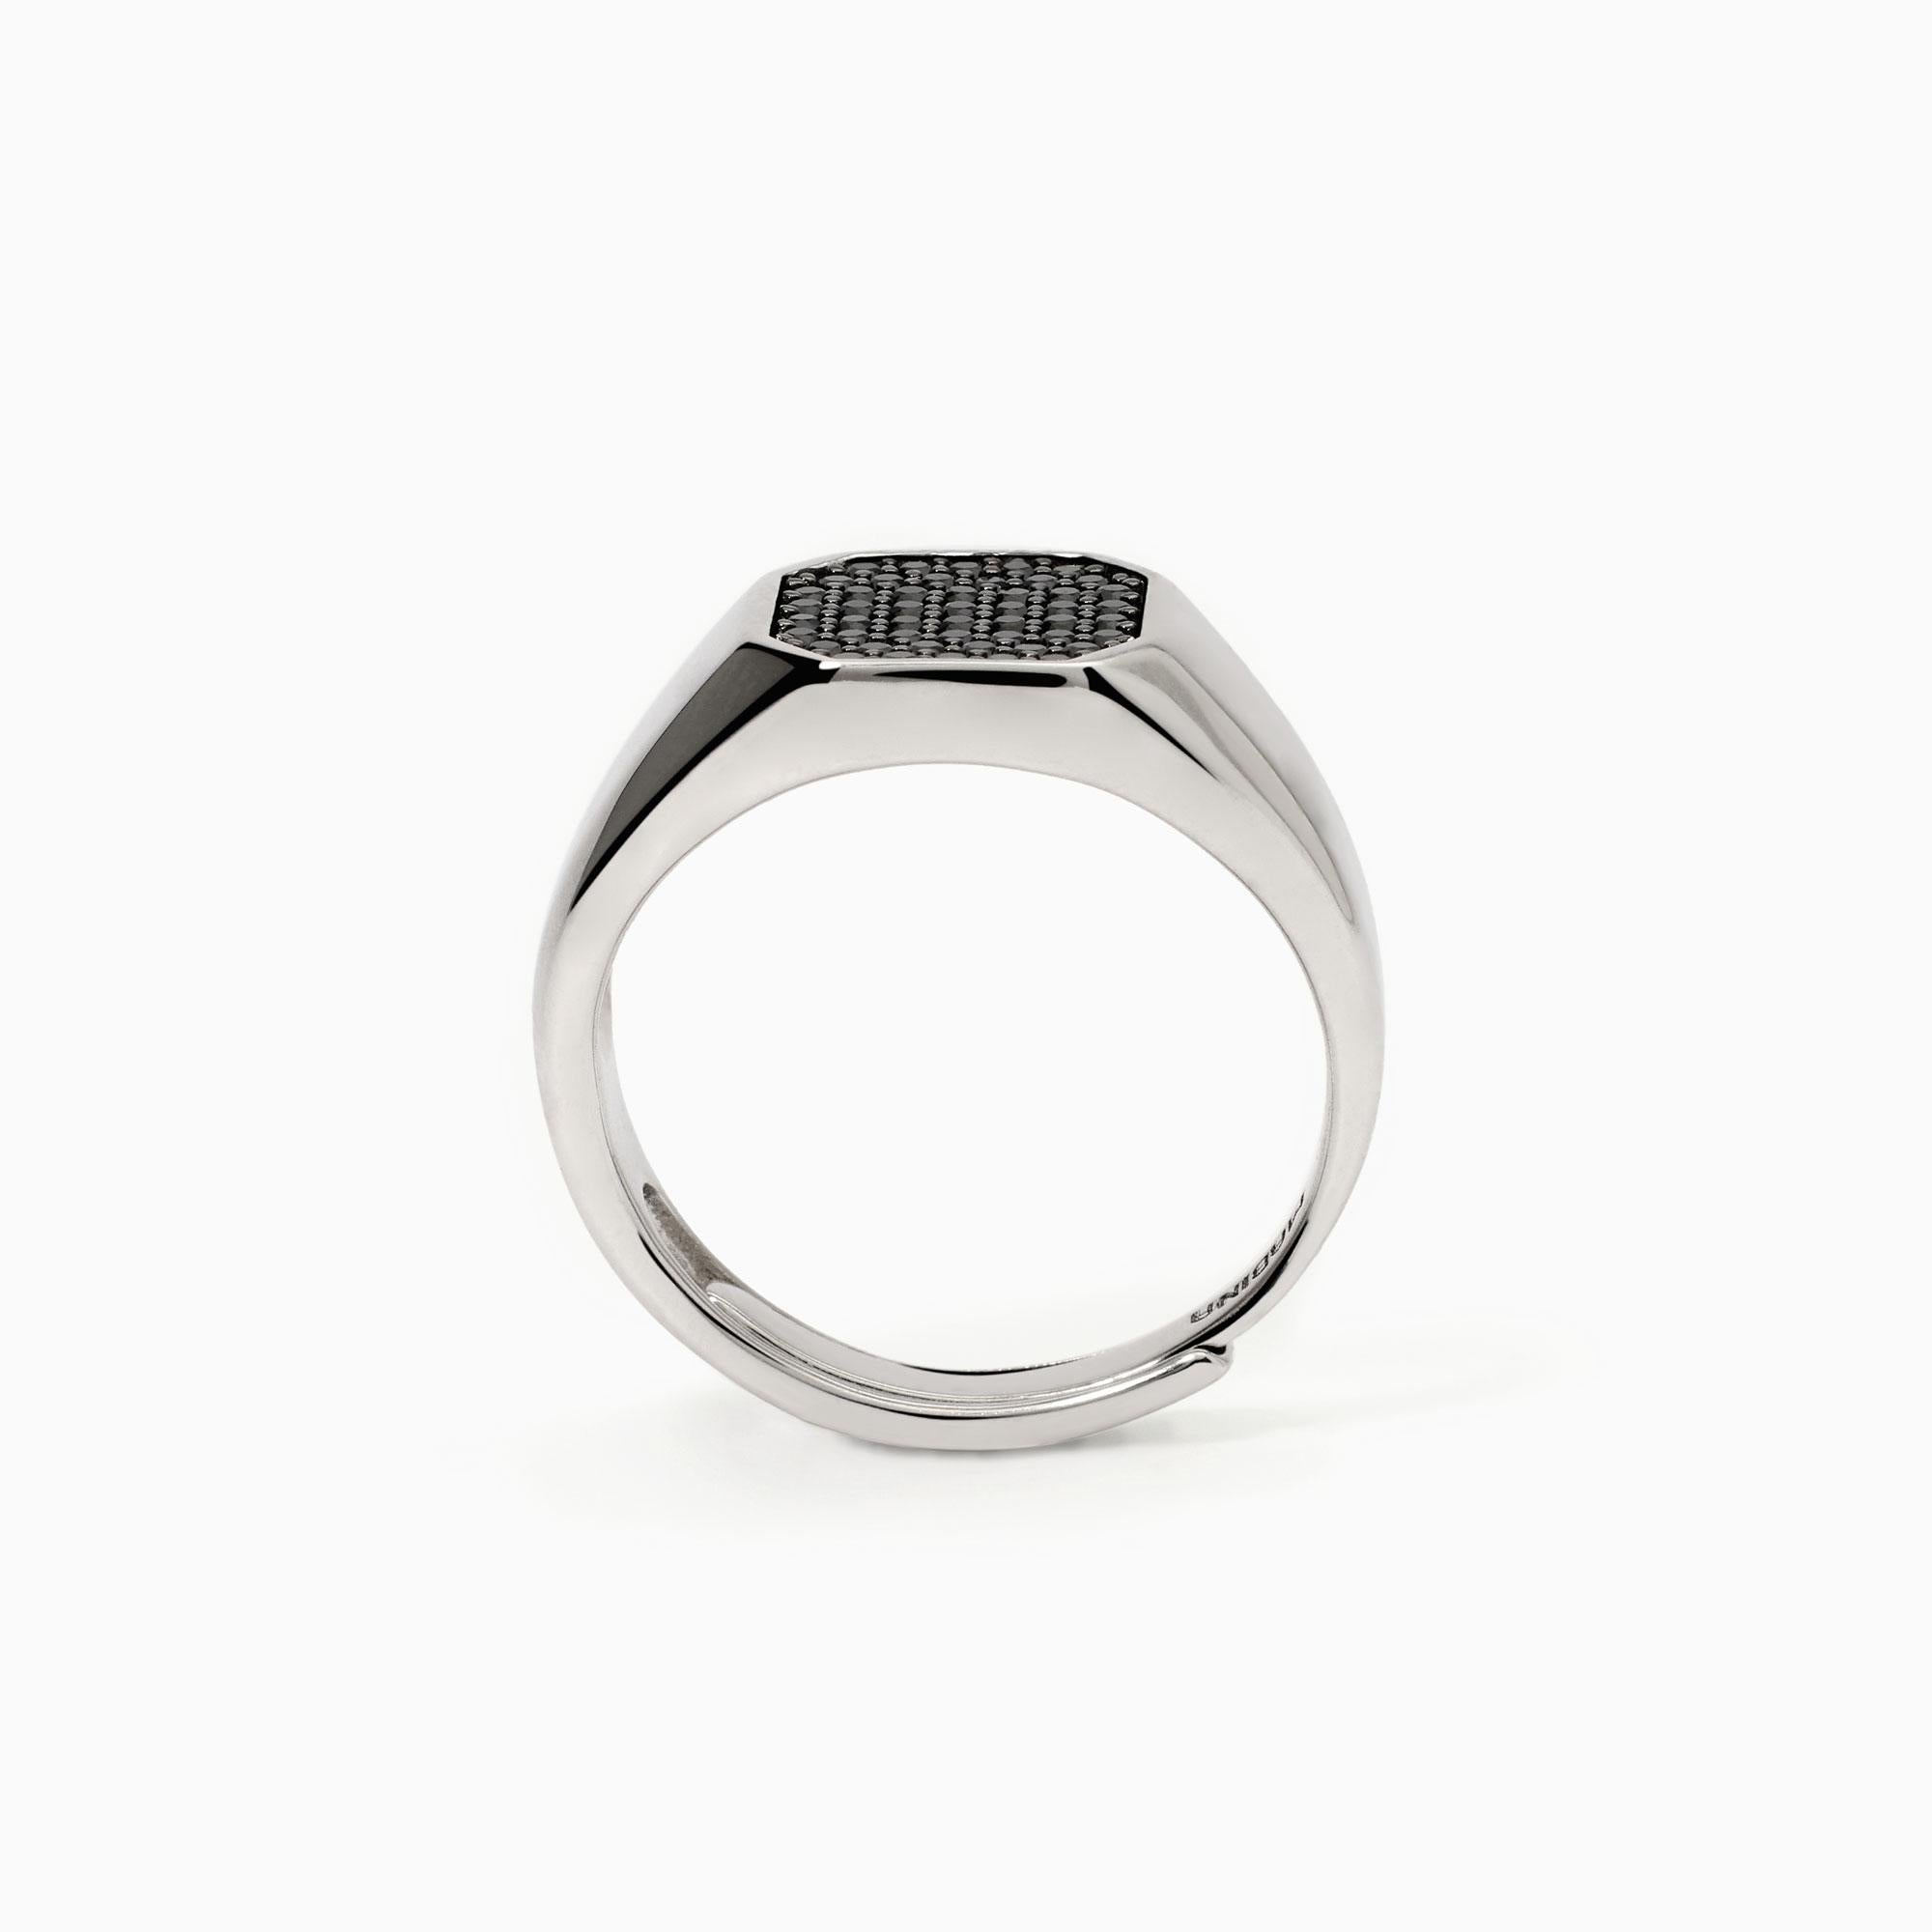 Mabina Uomo - Men's silver ring with black zircons PRIMO CAPITANO - 523401